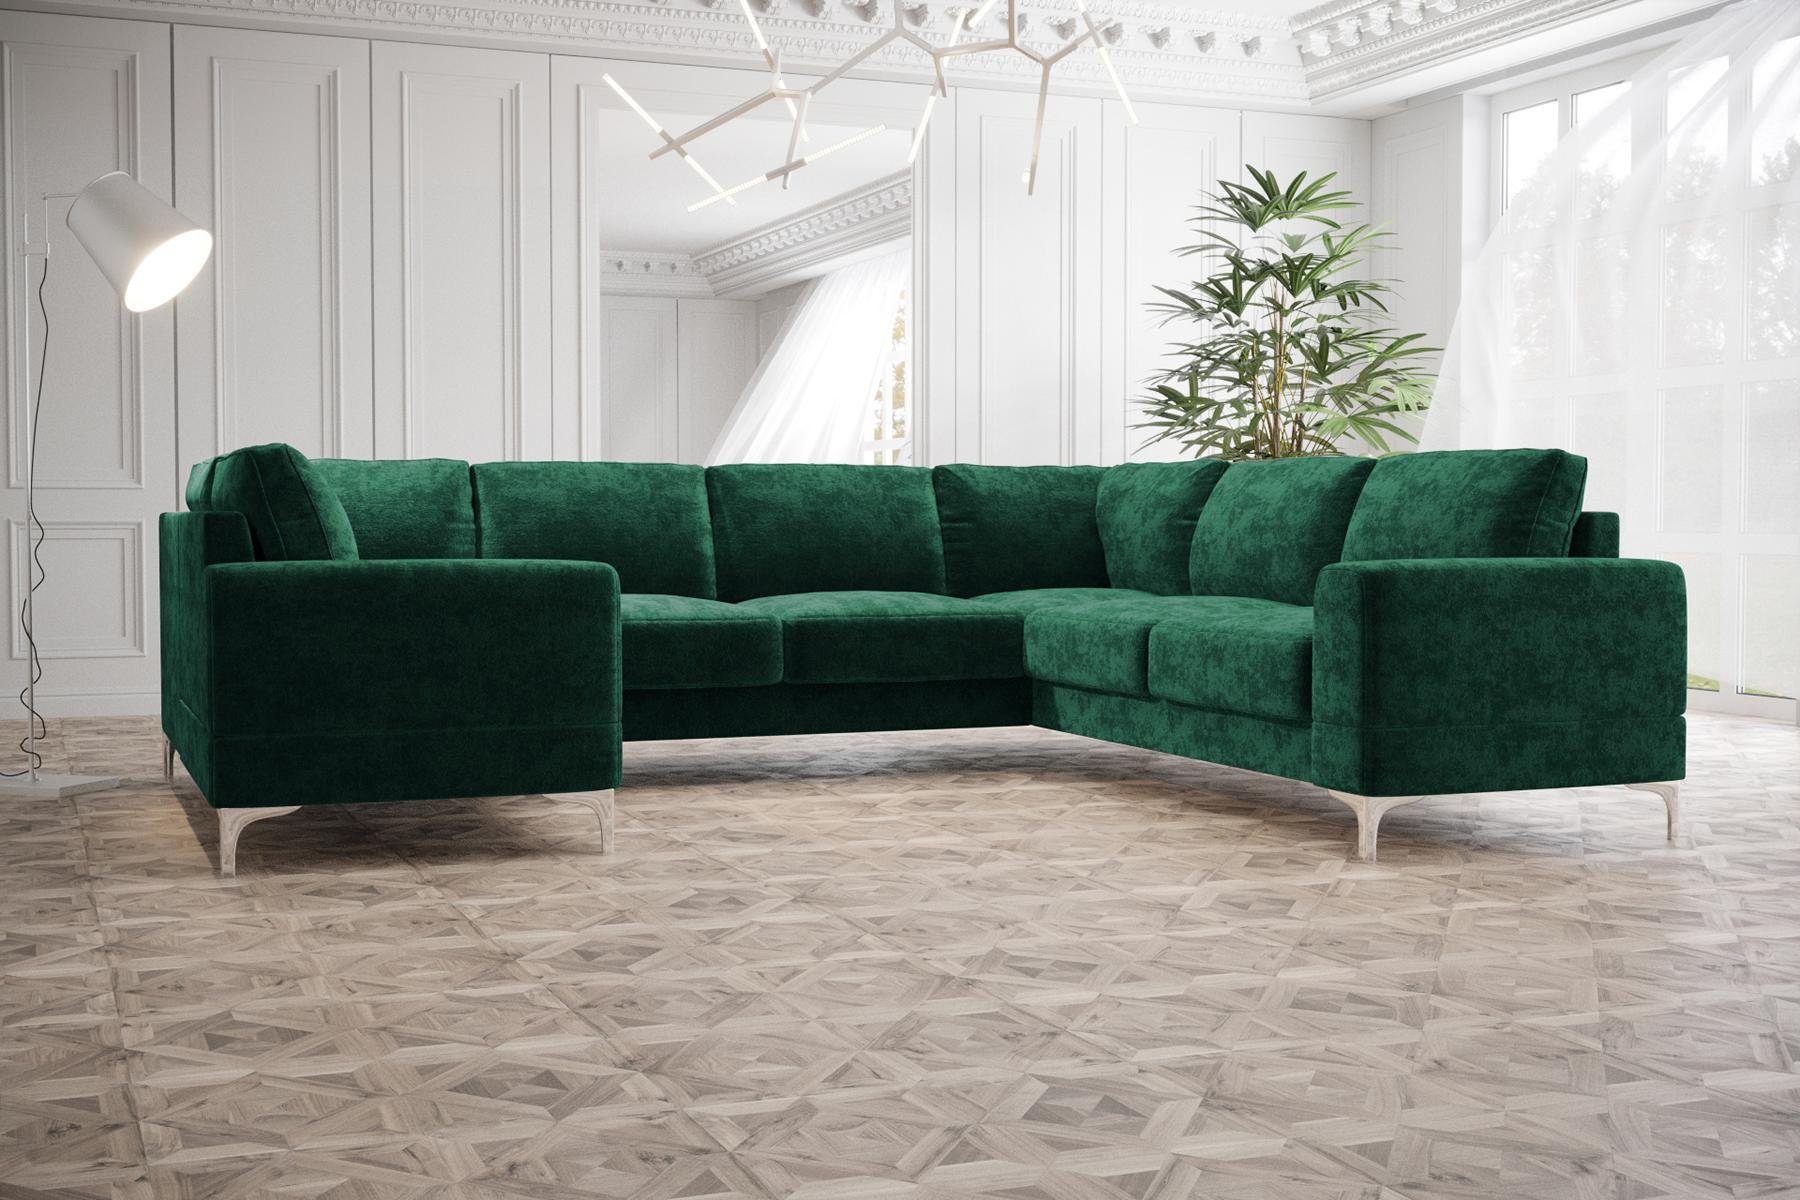 JVmoebel Europe Polsterecke Grün Neu, Ecksofa Sofa Couch Sofas in Wohnlandschaft Made